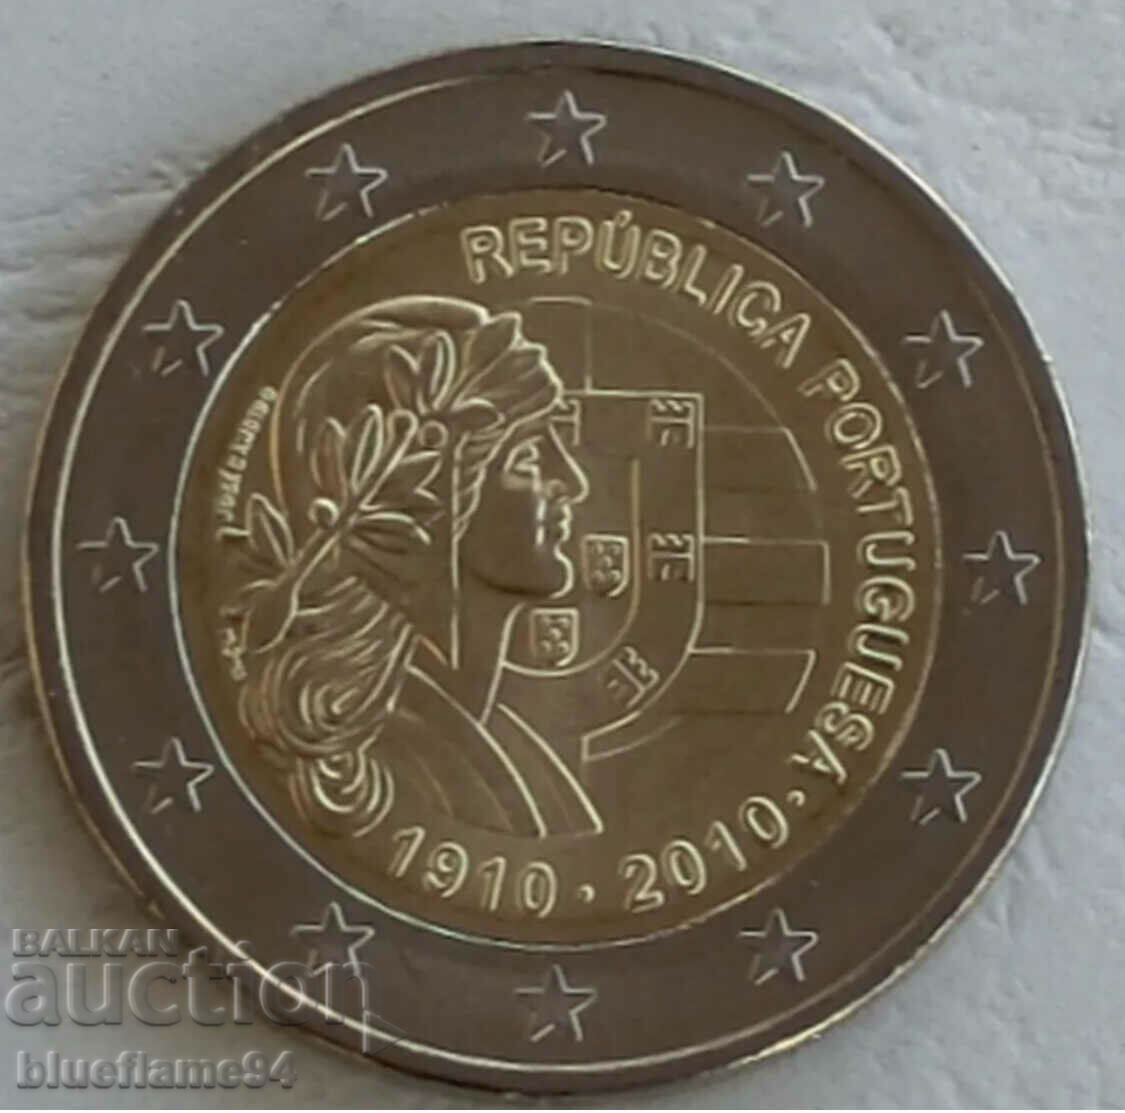 2 euro Portugal 2010